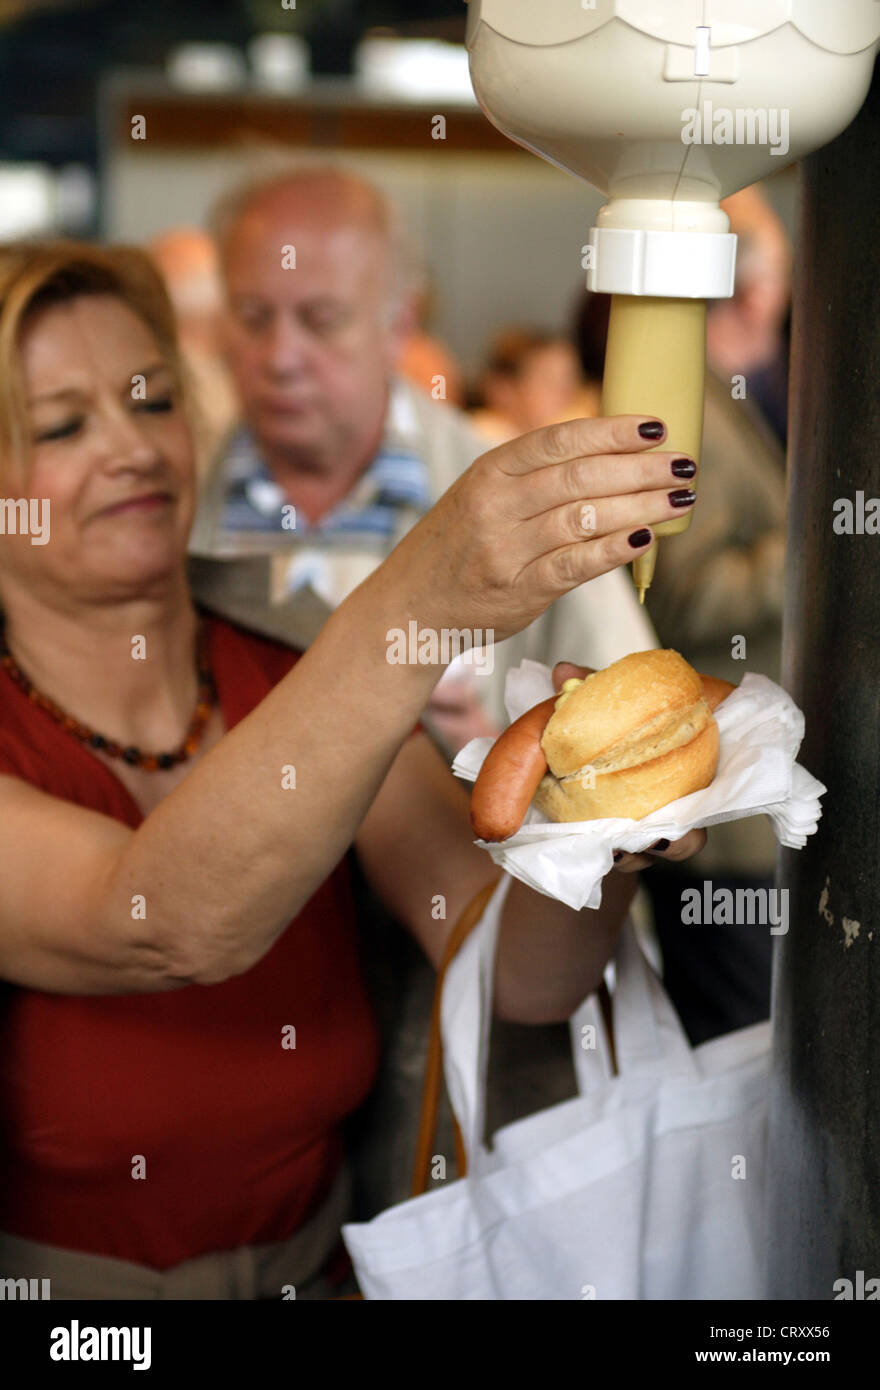 Sausages on buns with mustard dispenser, Lufthansa HV Stock Photo